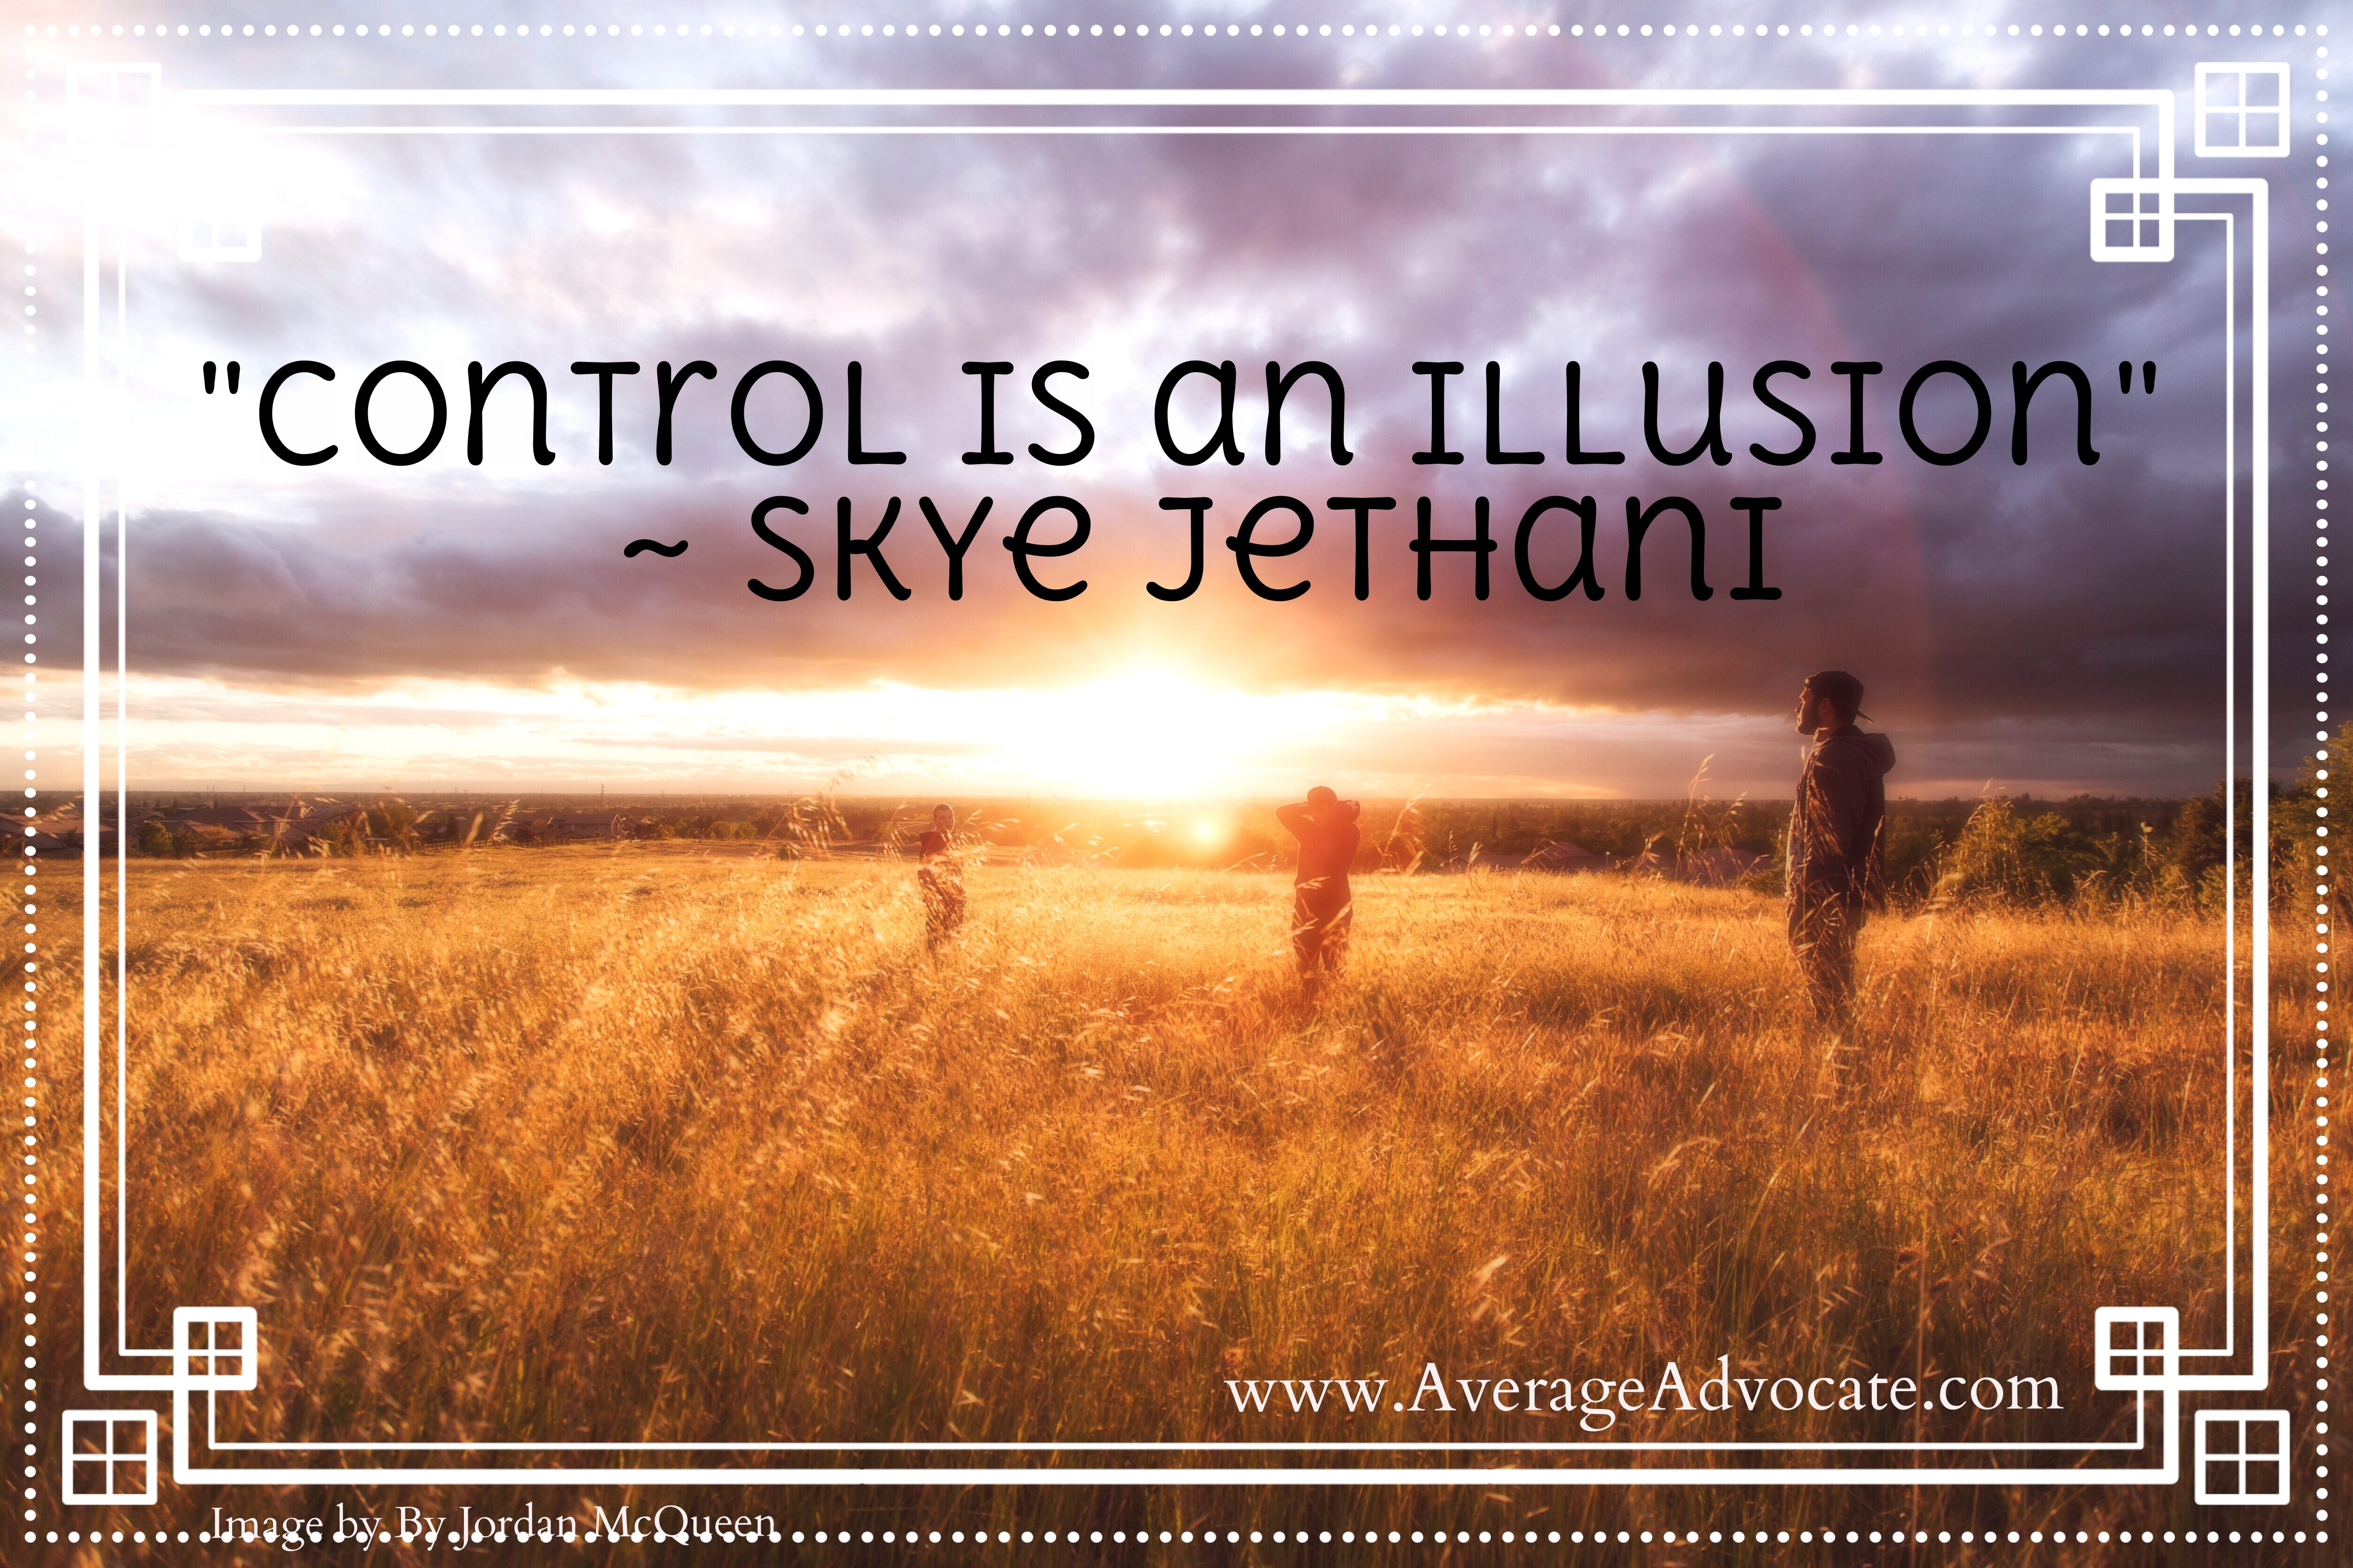 control illusion www.AverageAdvocate.com skye Jethani